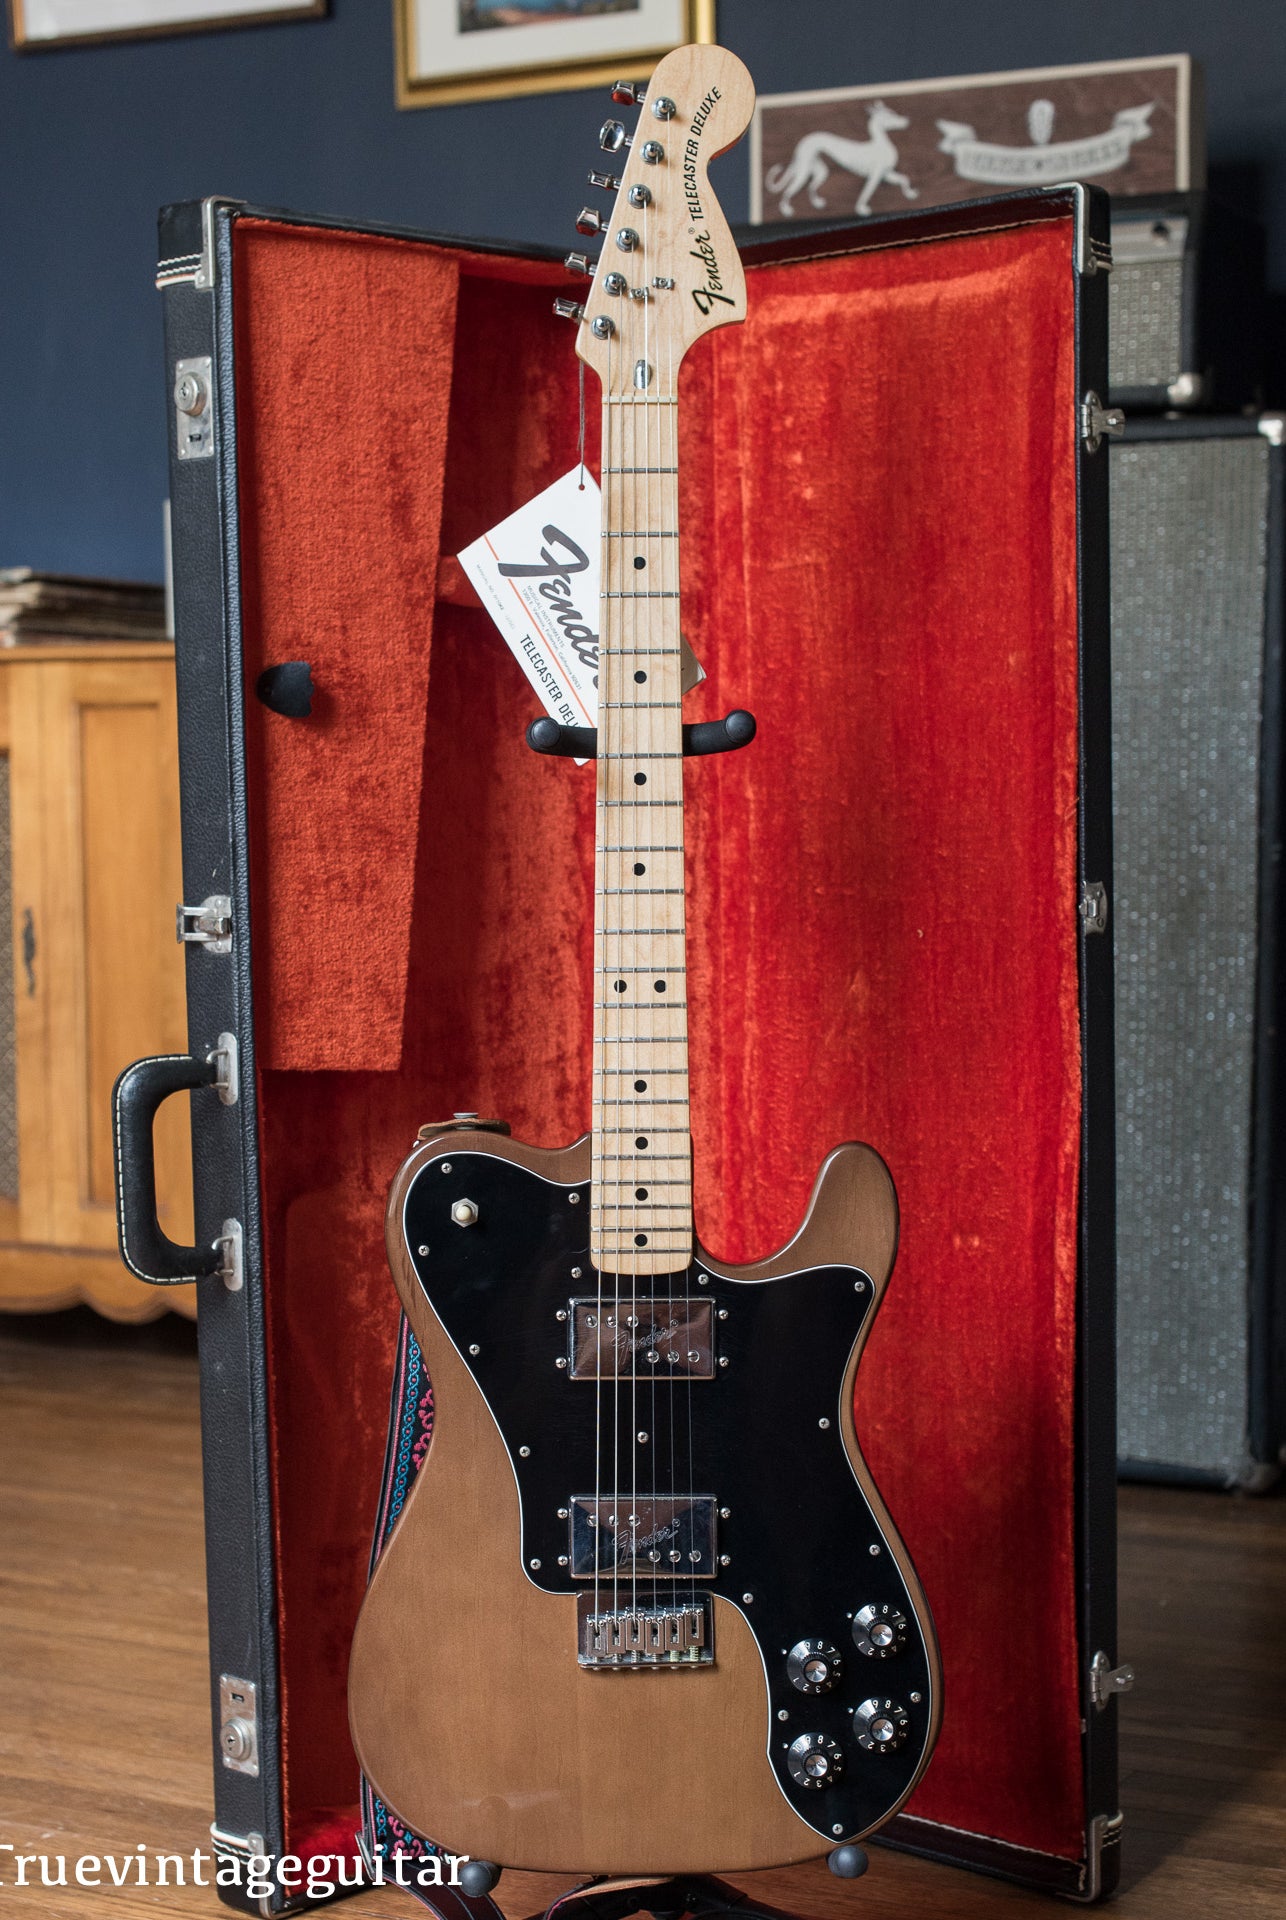 Vintage 1974 Fender Telecaster Deluxe guitar Mocha